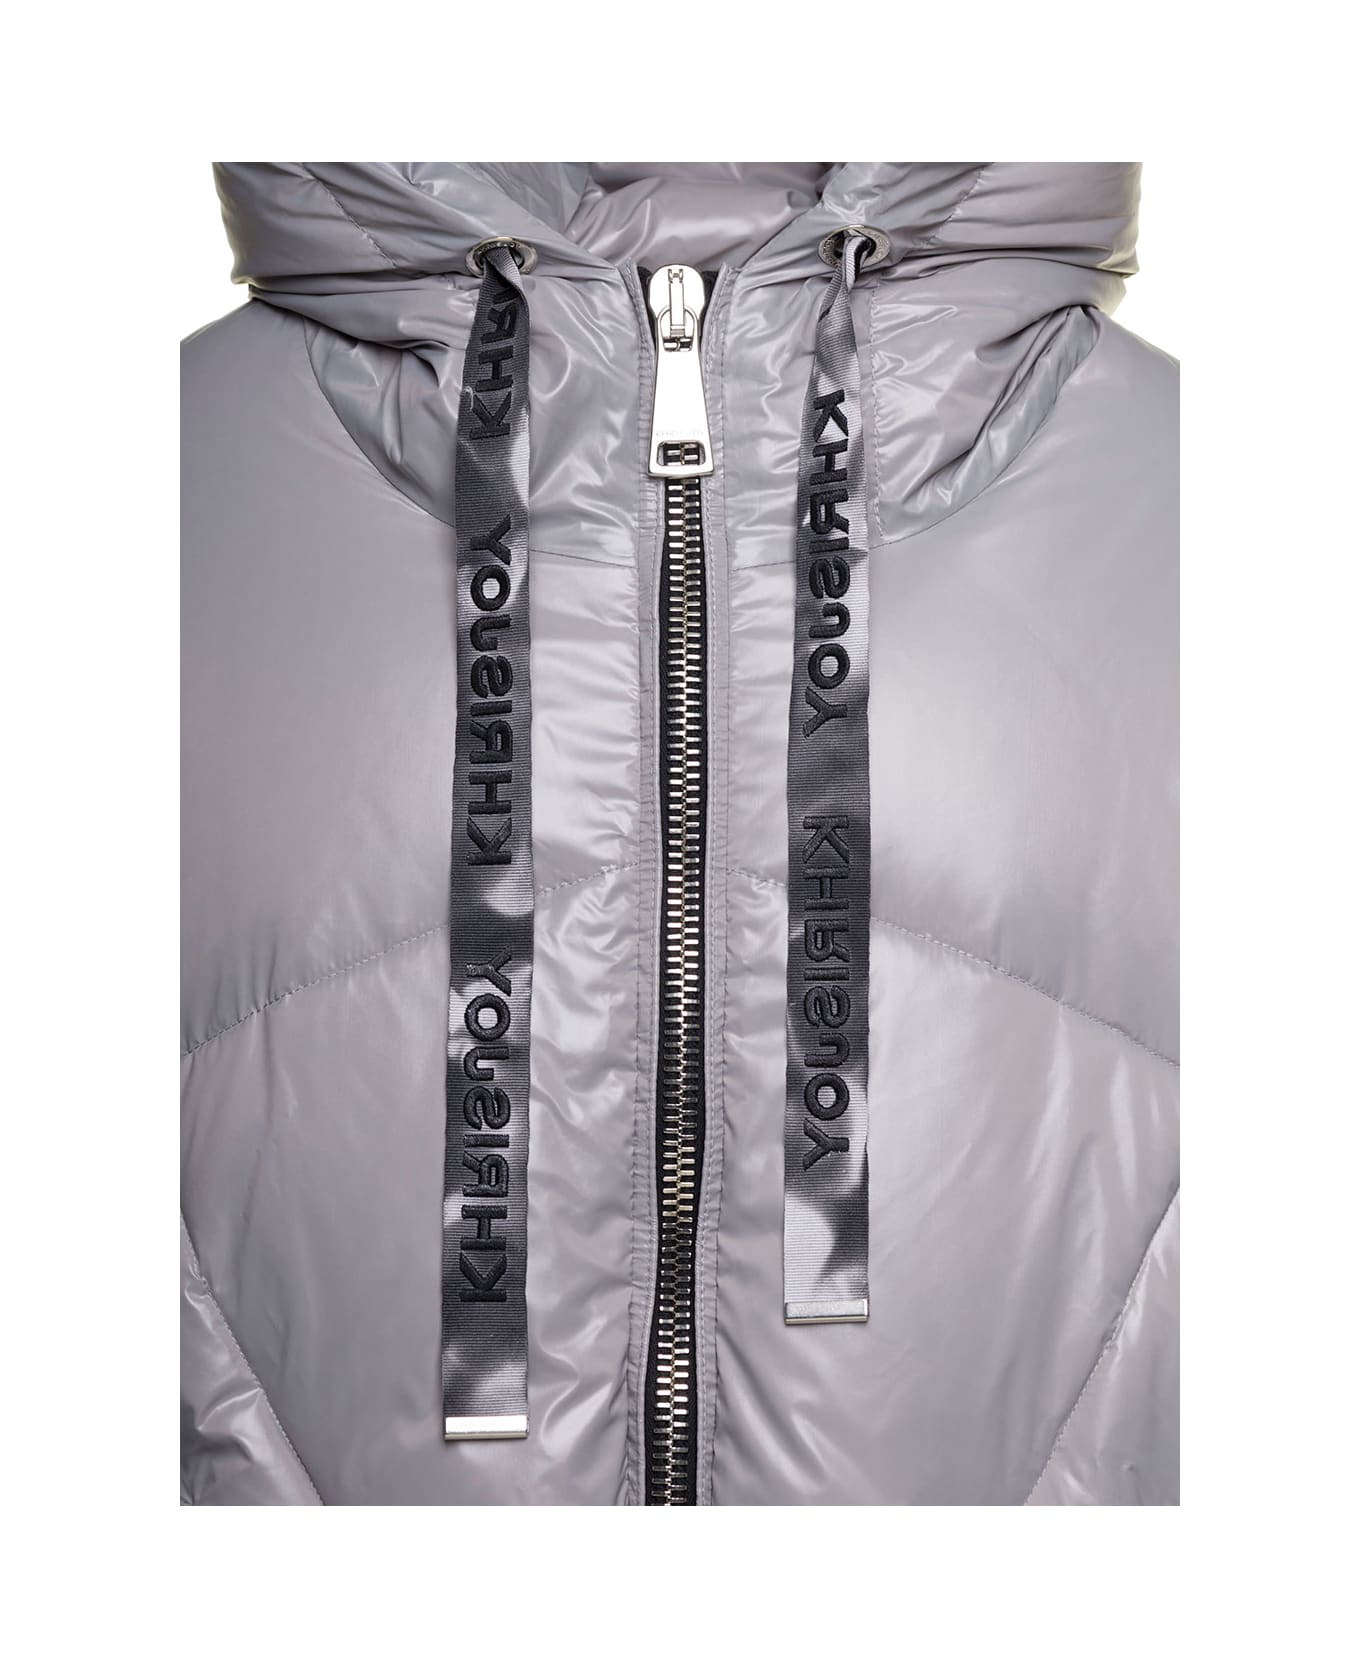 Khrisjoy Grey 'puff Khris Iconic' Oversized Down Jacket With Hood In Polyester Woman - Metallic コート